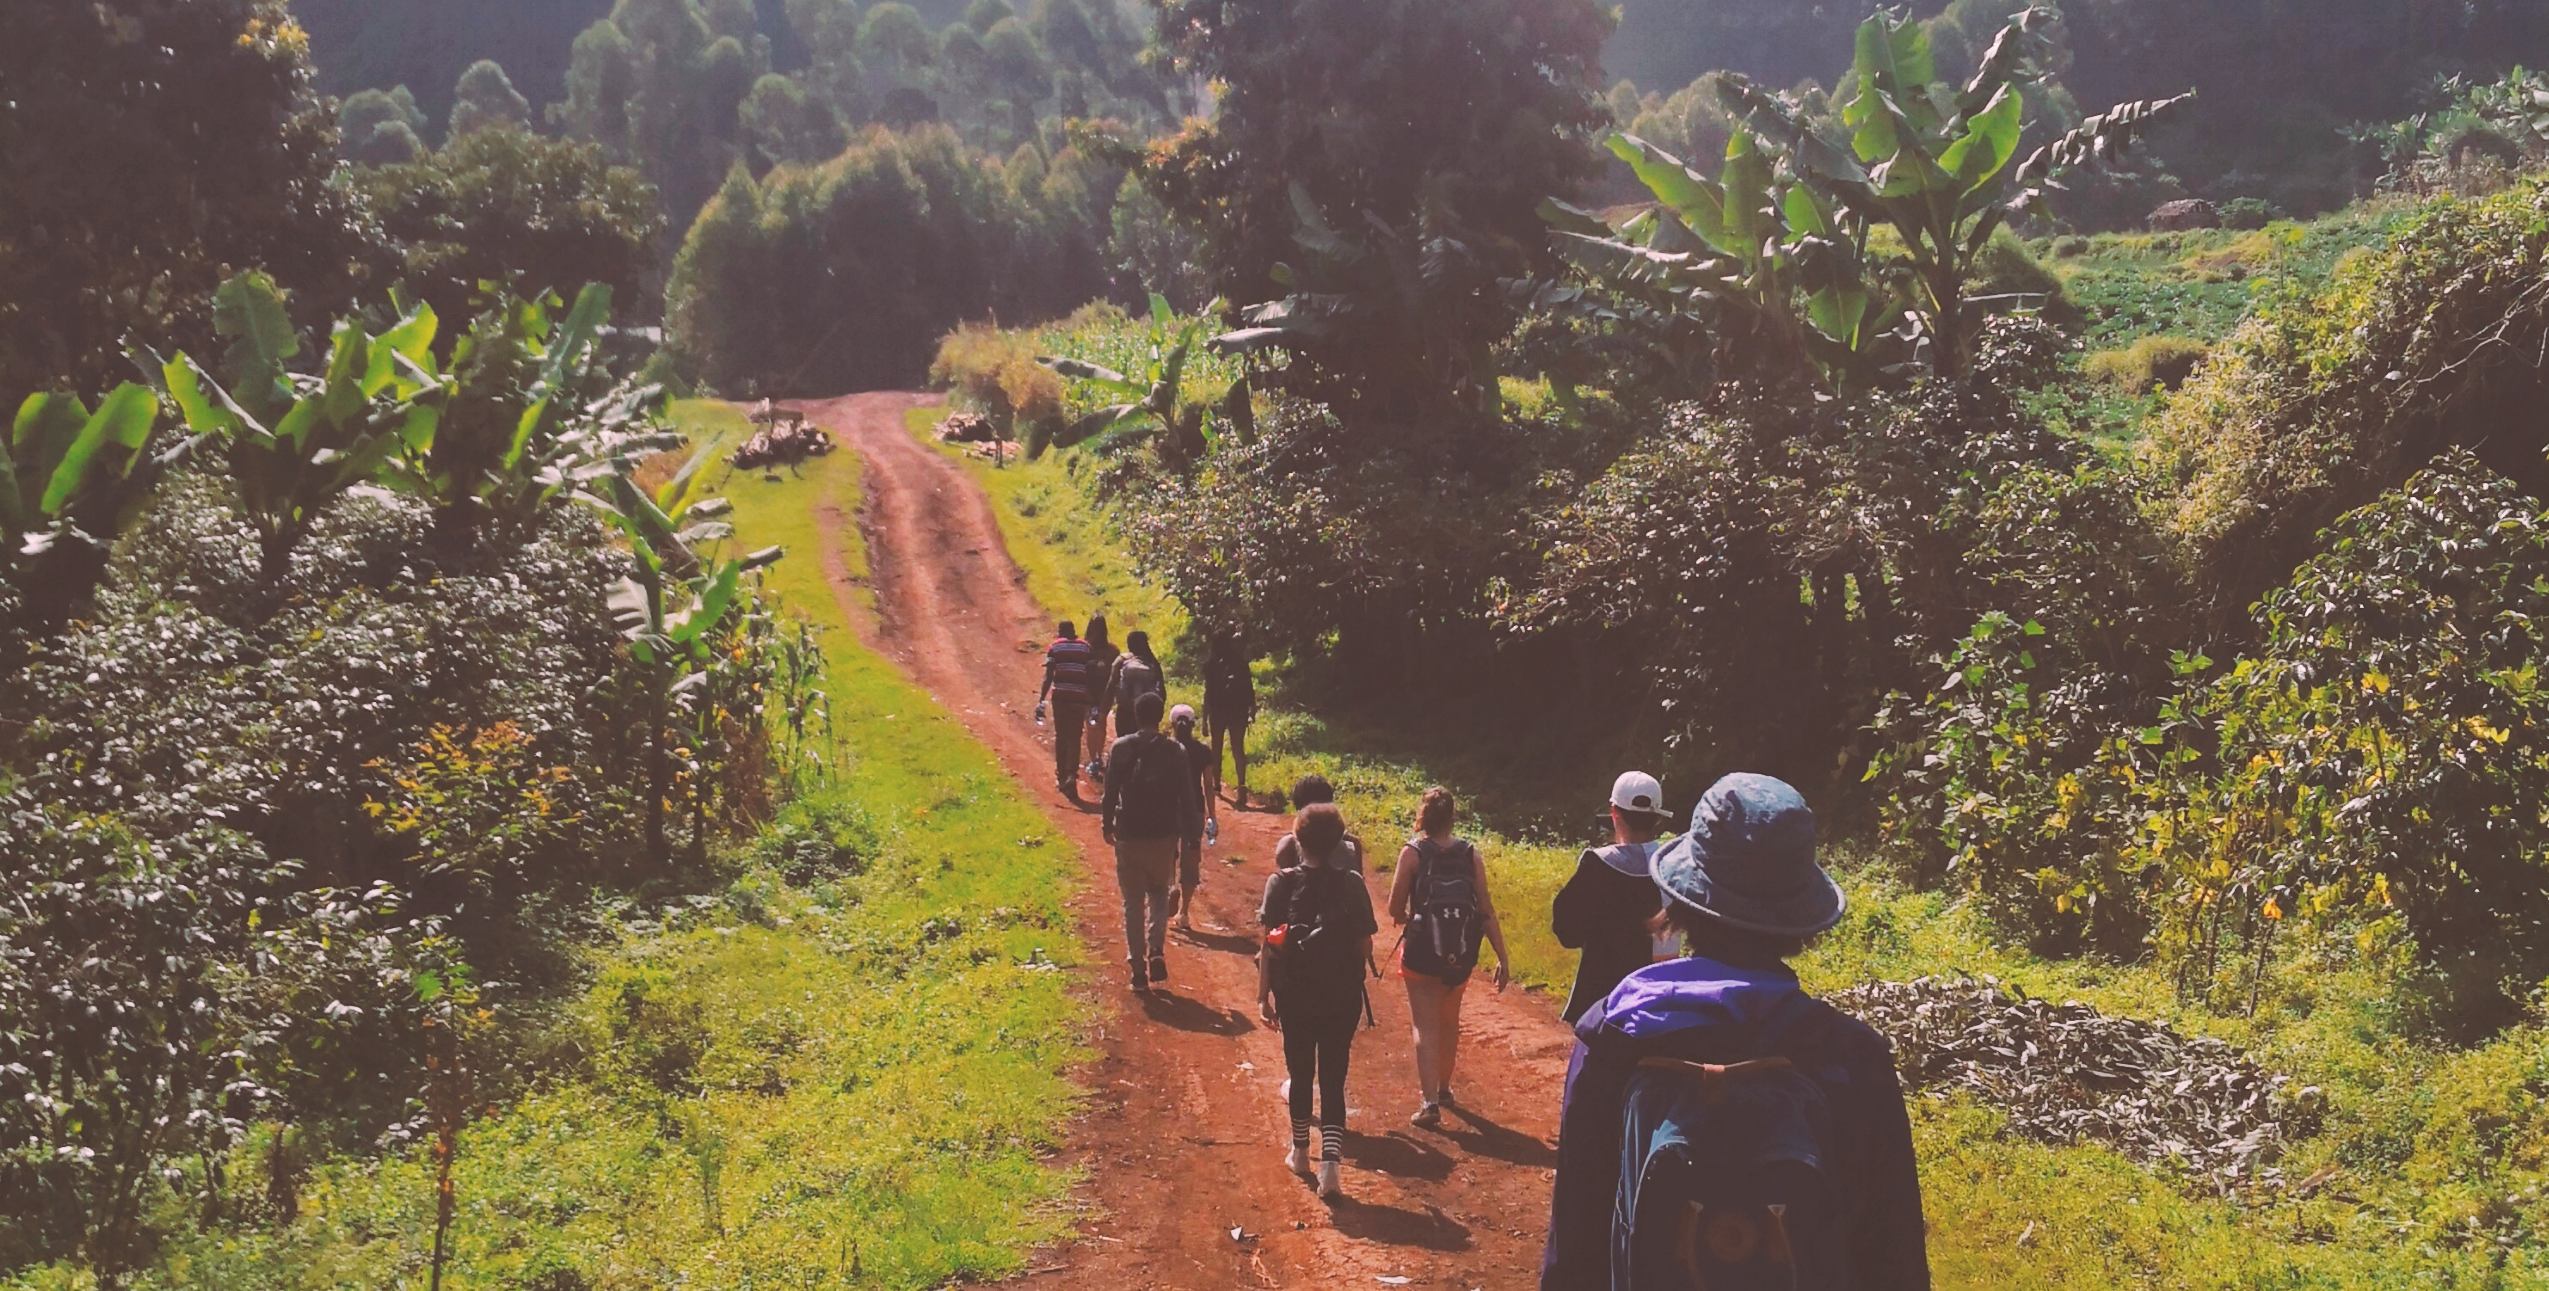 GESI students work with community-based organizations in Uganda